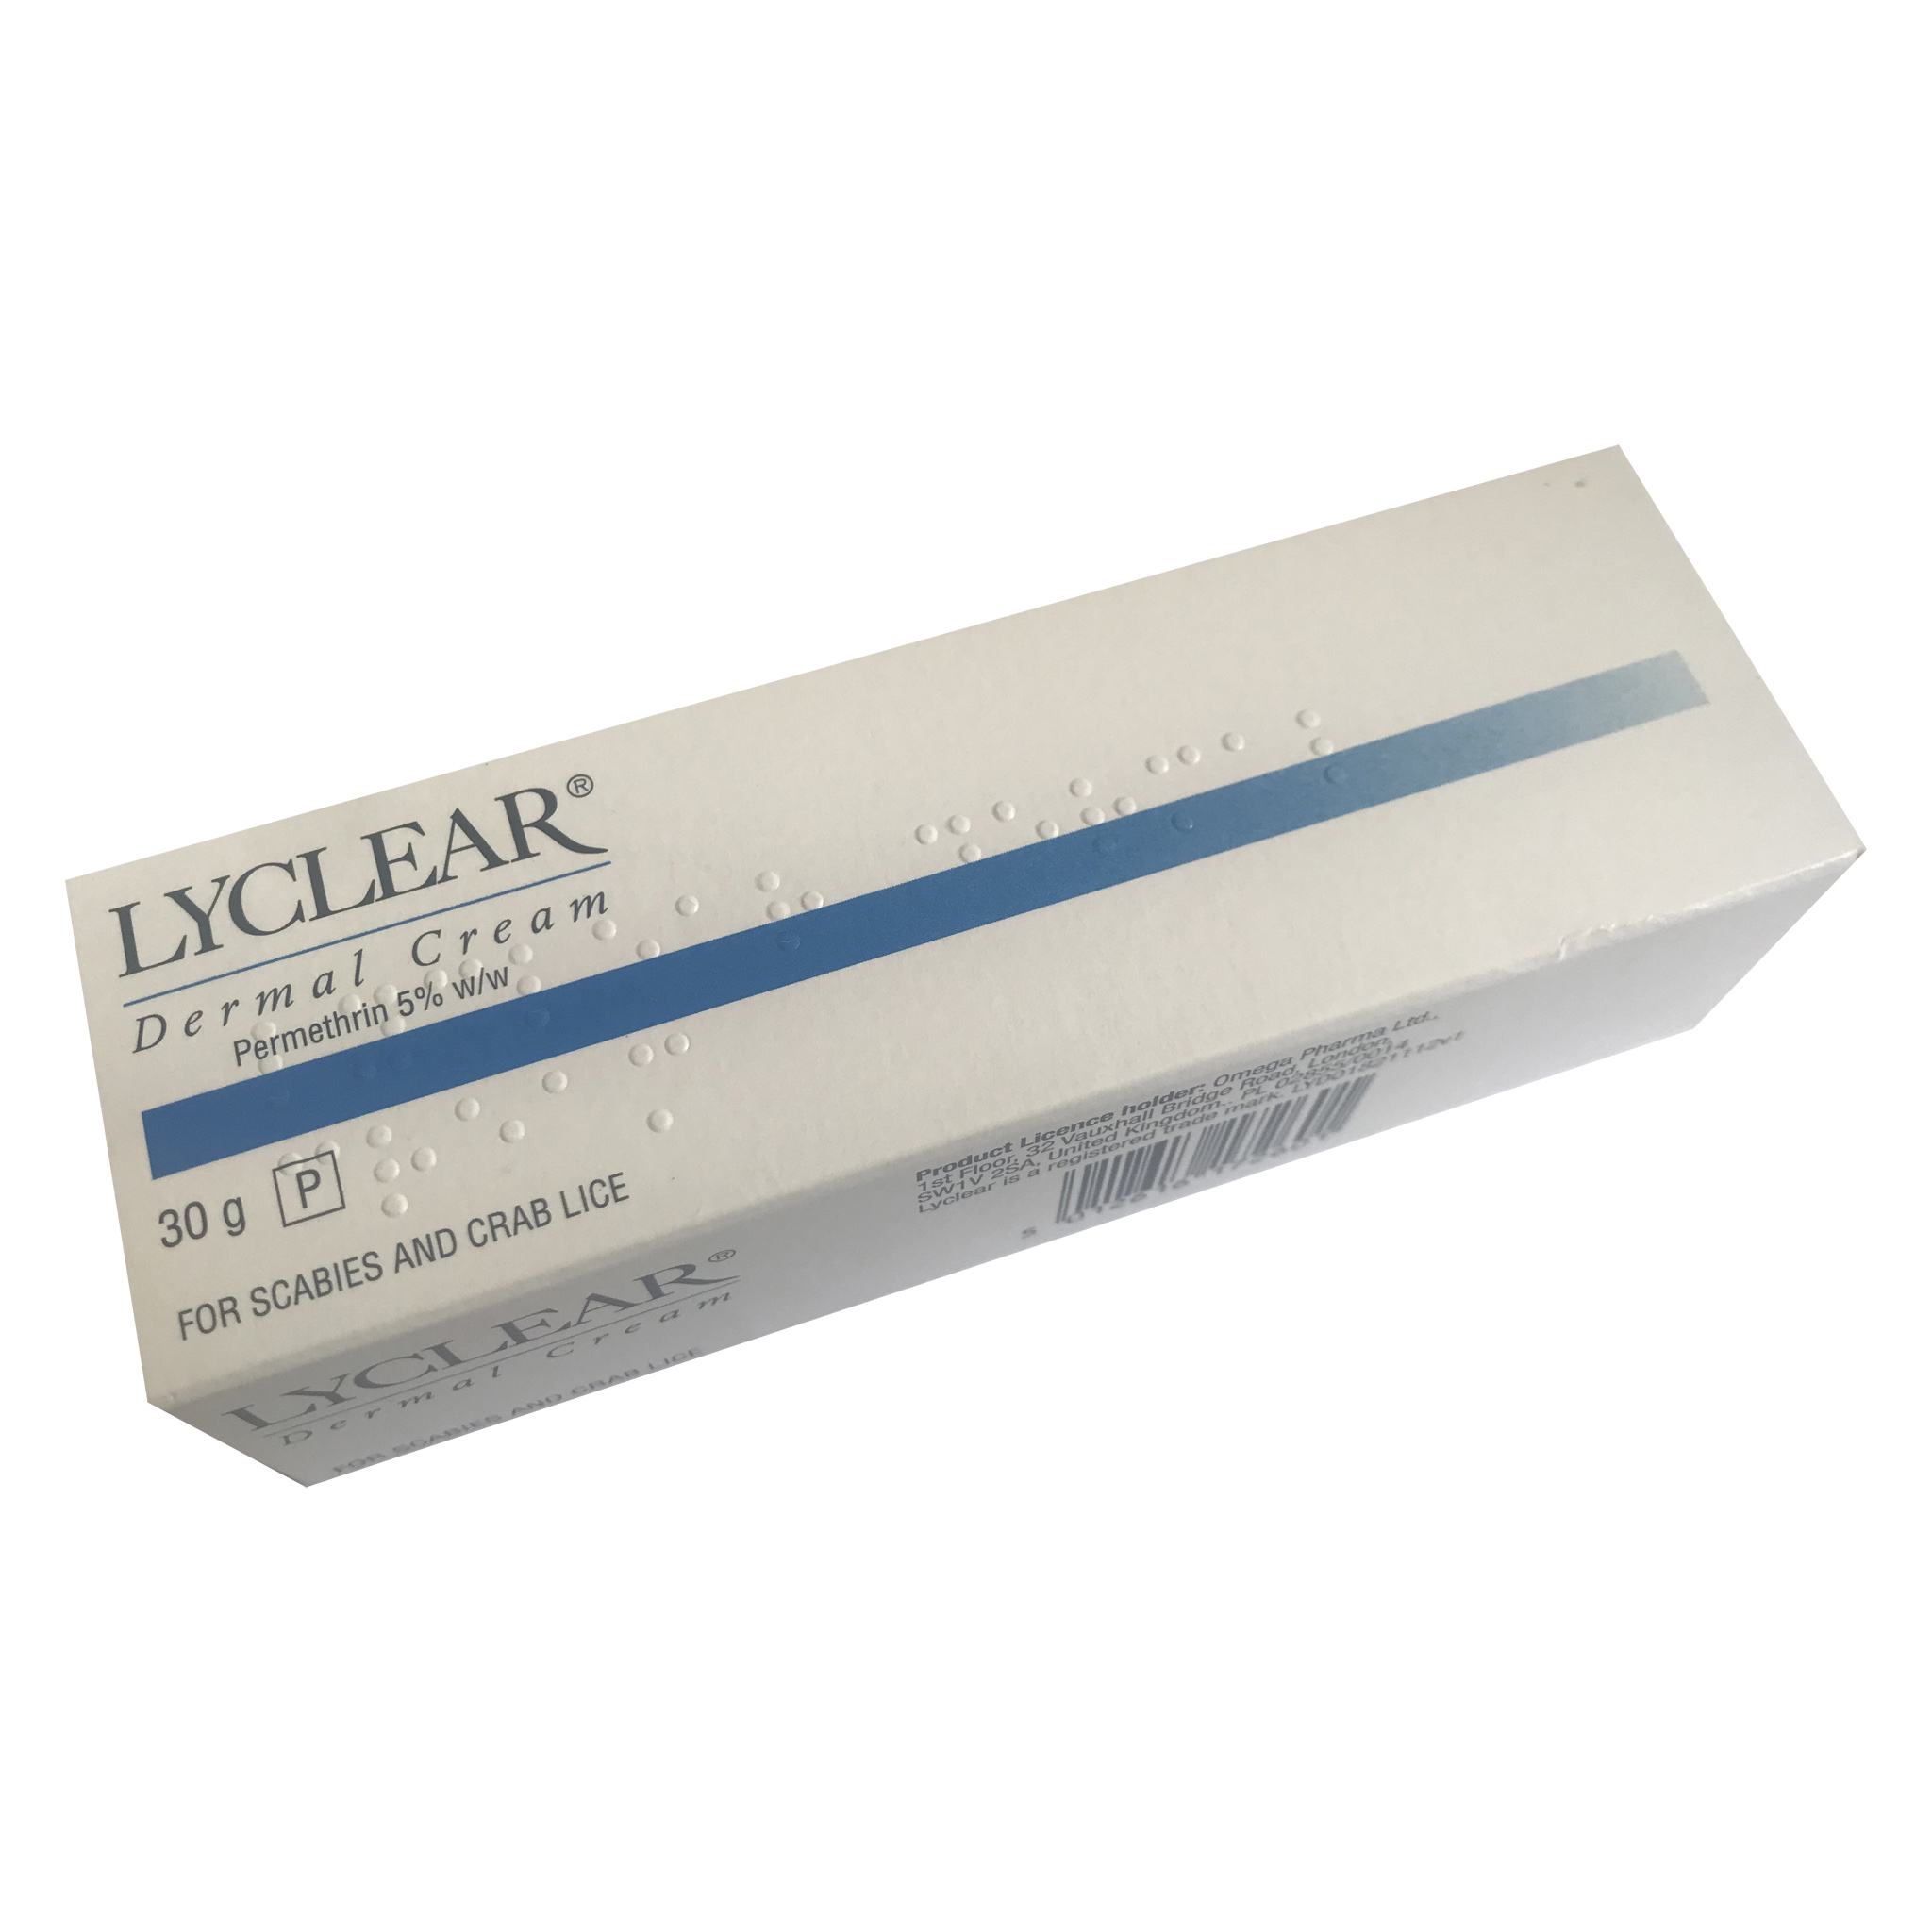 Lyclear Dermal Cream (30g) - 3 Packs